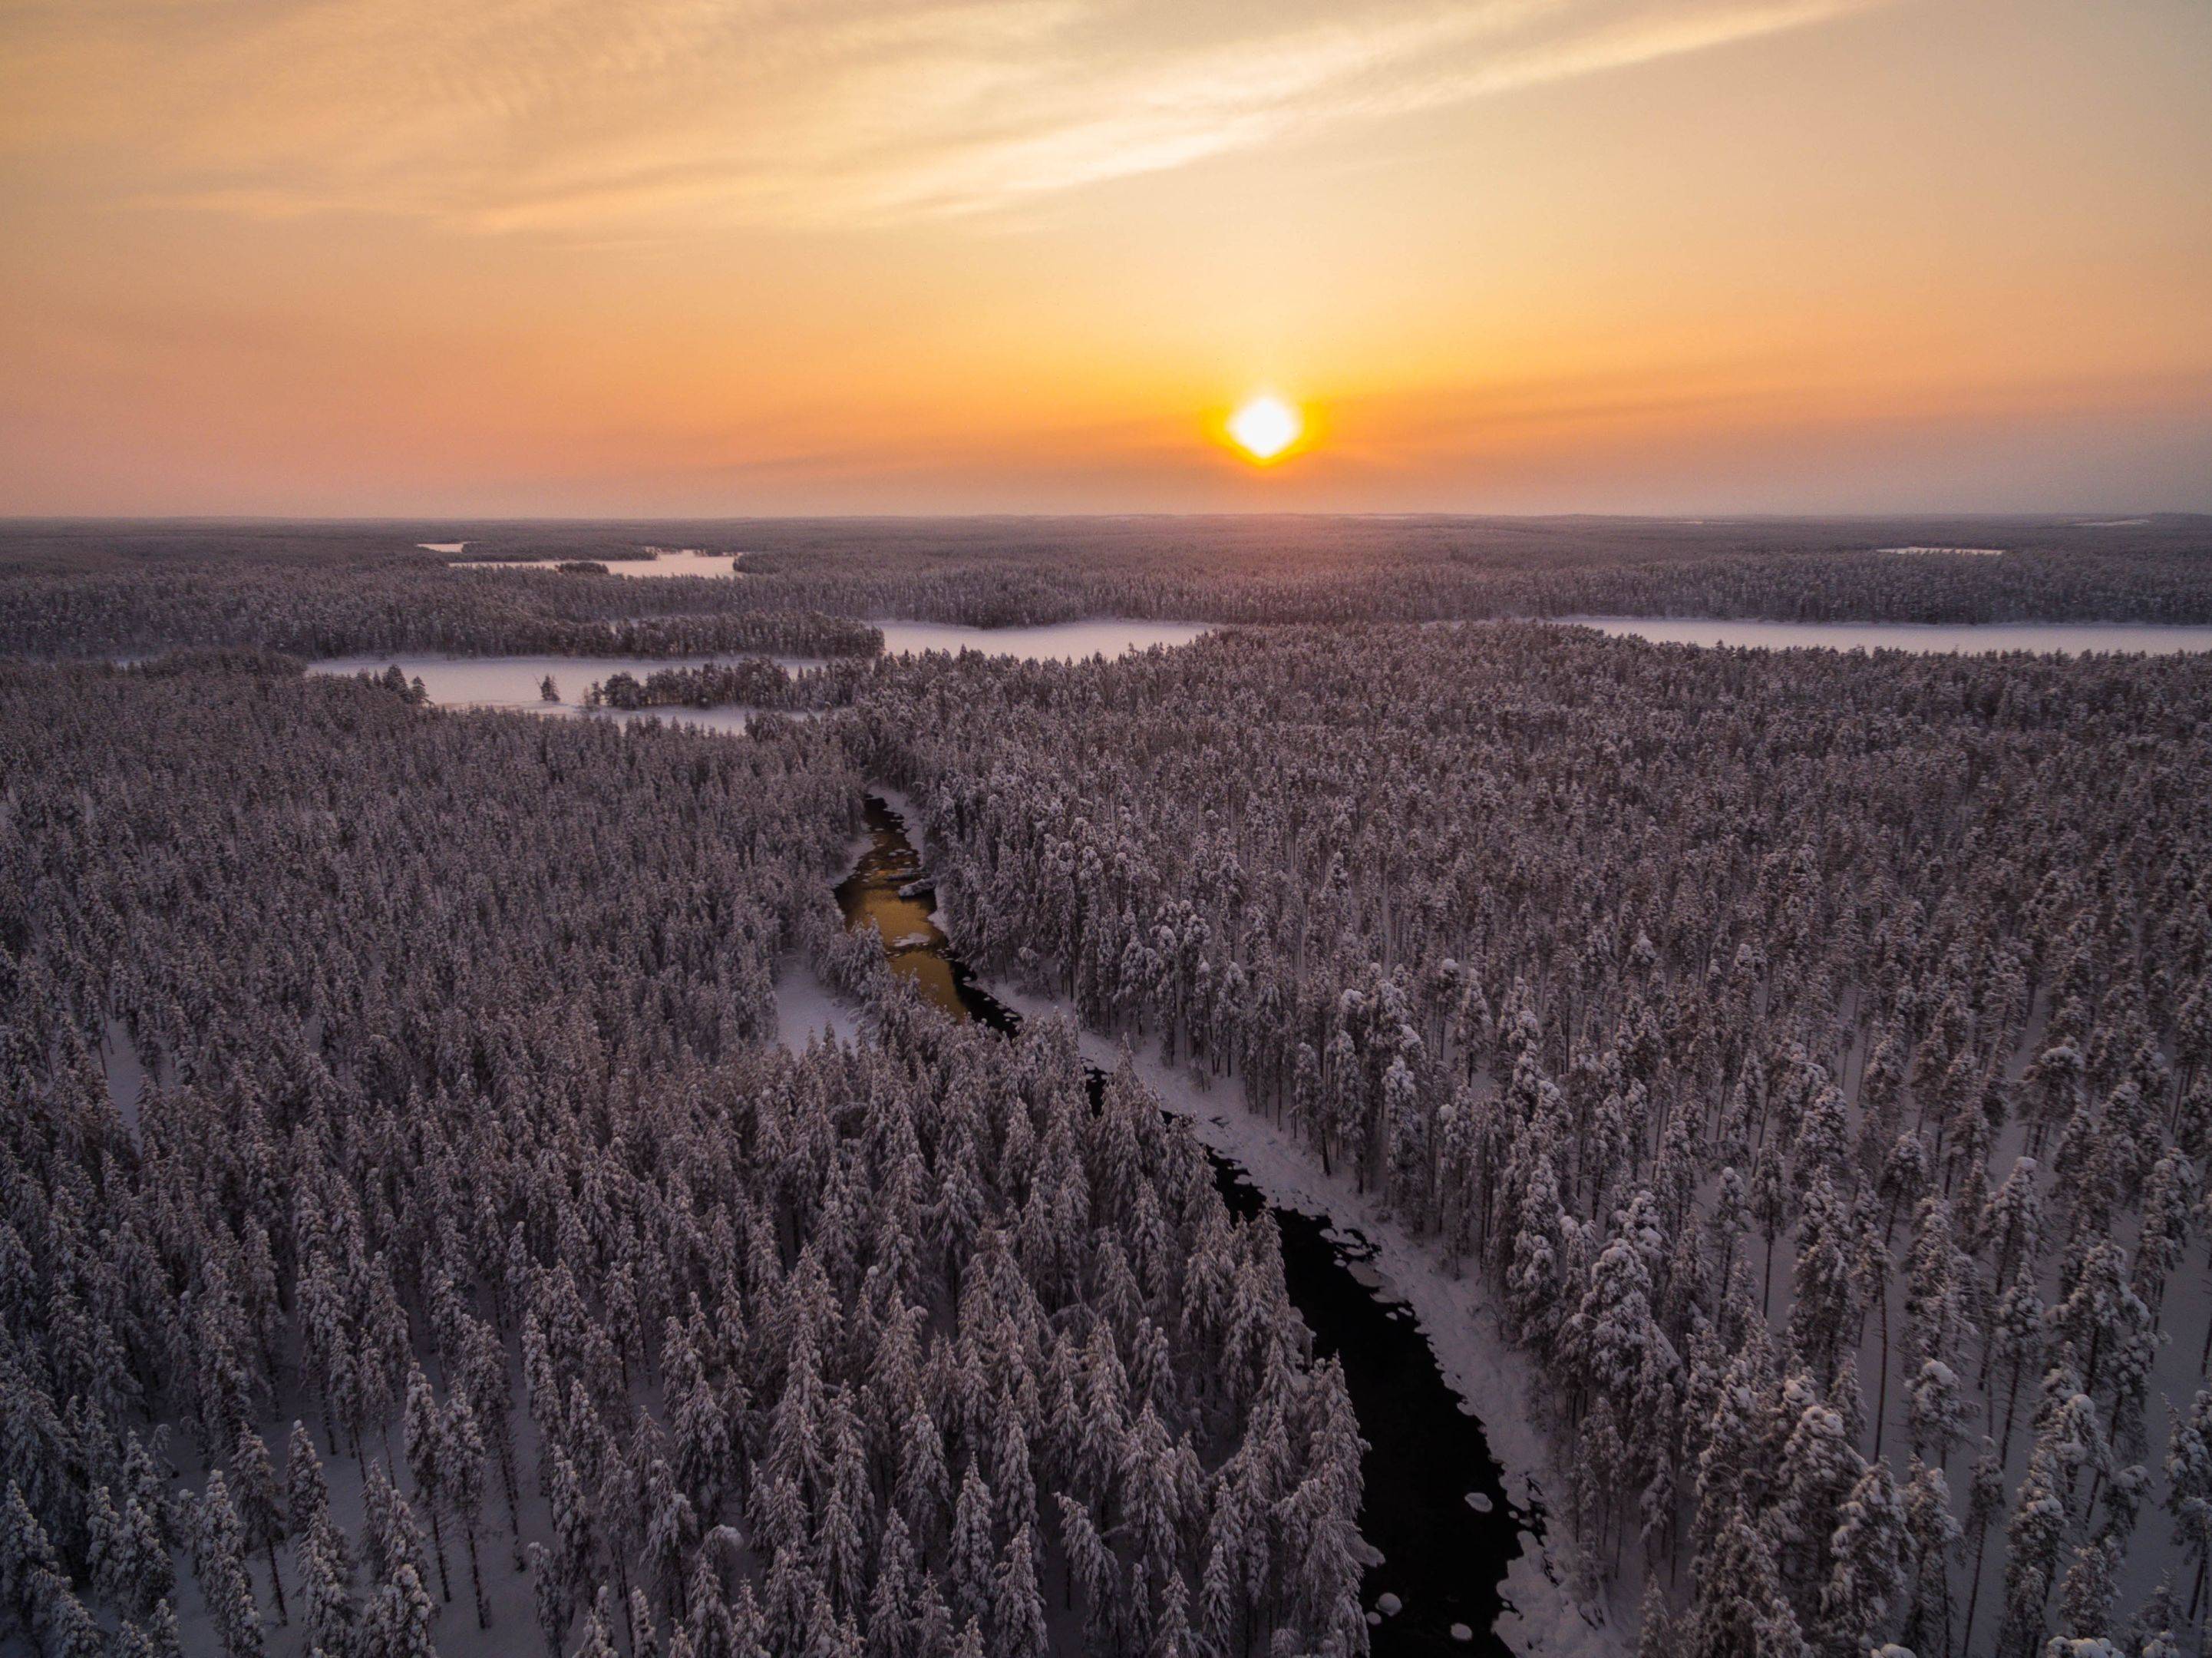 La Finlande grandeur nature, en petit groupe